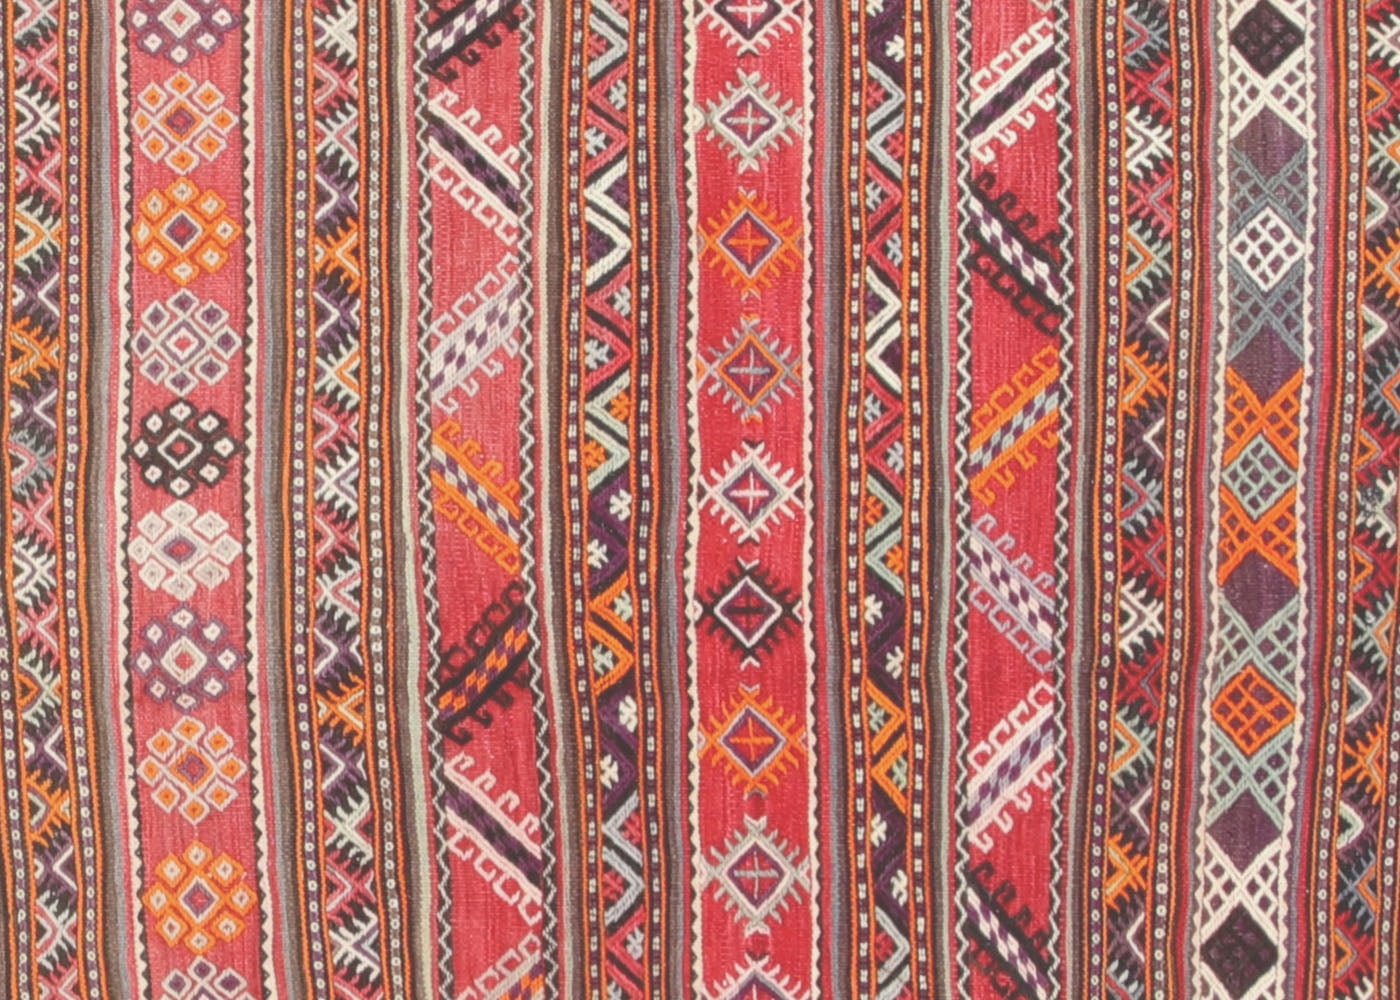 Vintage Persian Kilim - 5'11" x 12'4"